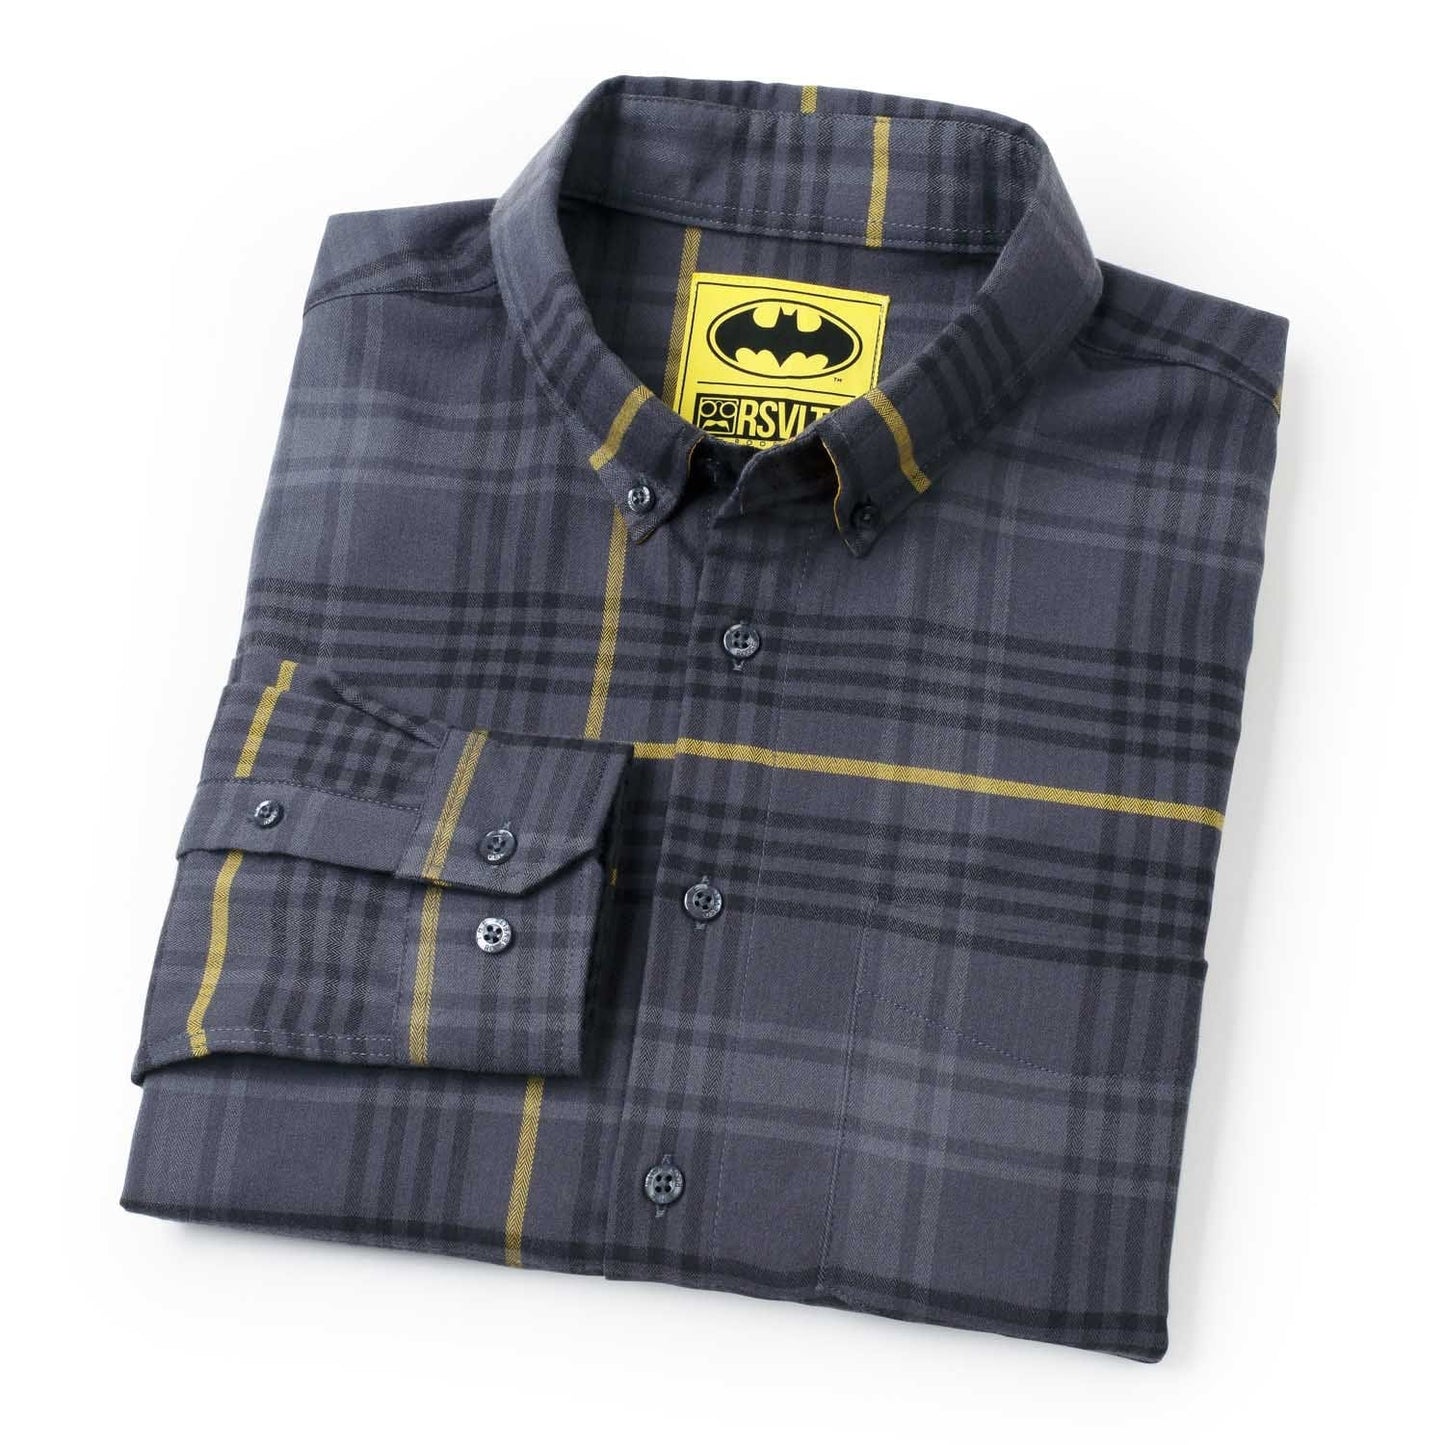 Batman "The Dark Flannel" (DC Comics) Flannel Shirt by RSVLTS